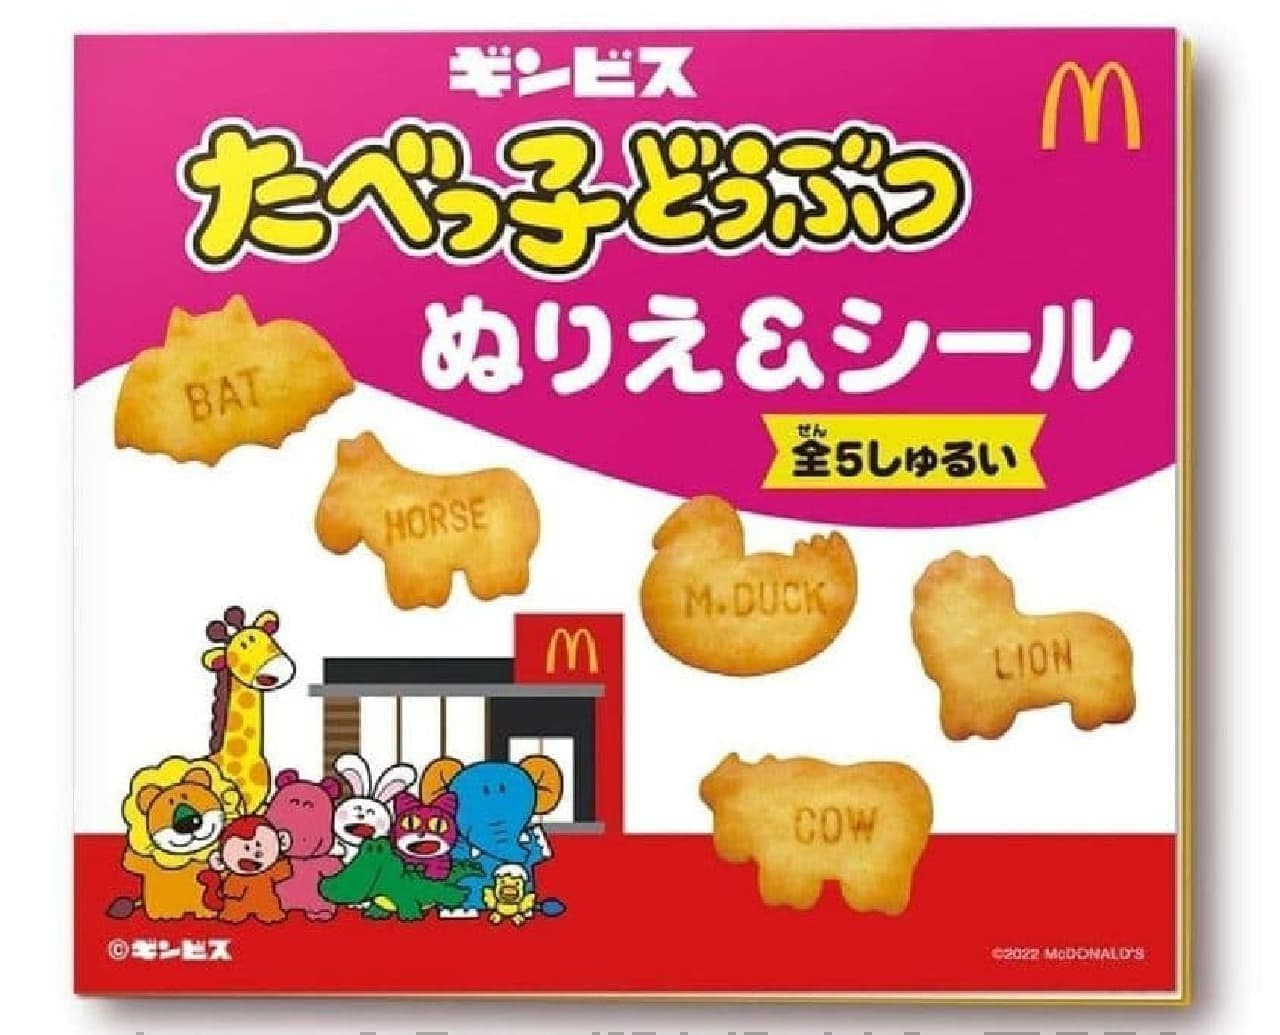 McDonald's Happy Set "TABEKO DOBUTSU